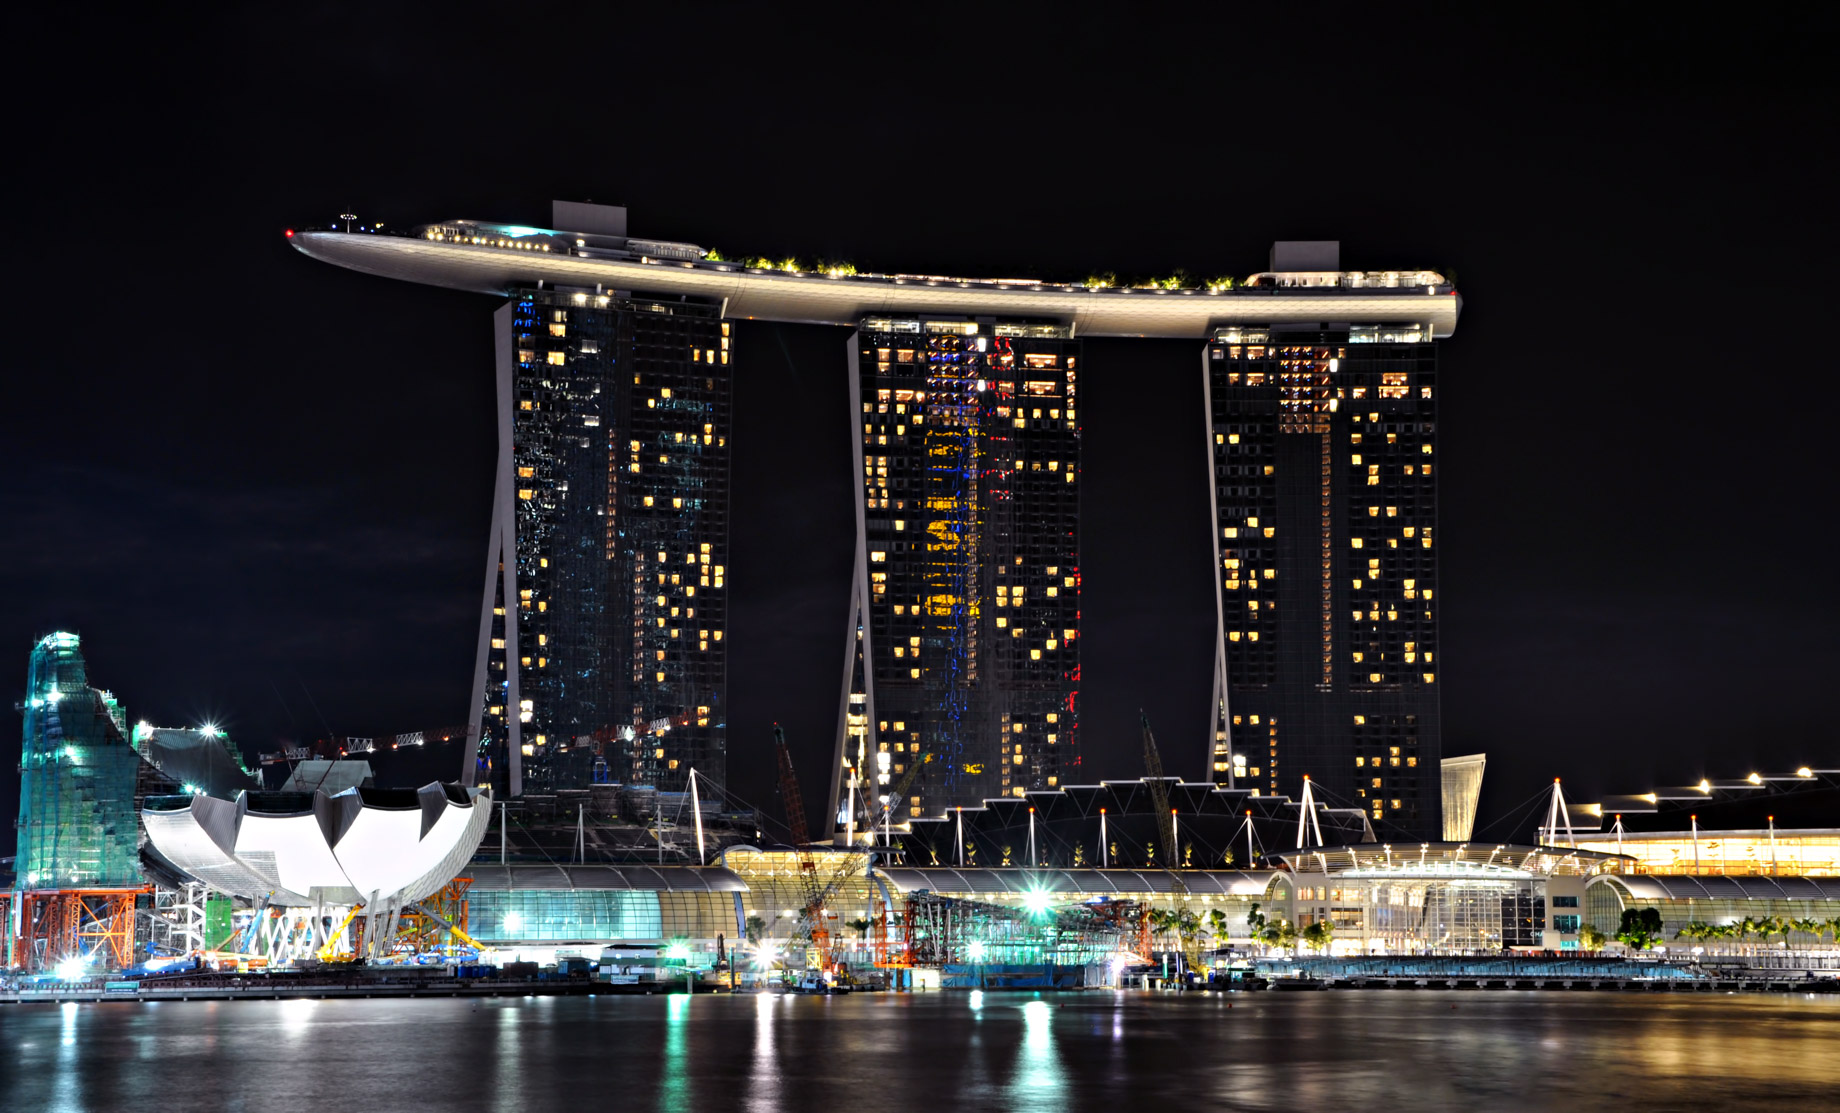 Marina Bay Sands Casino – Singapore